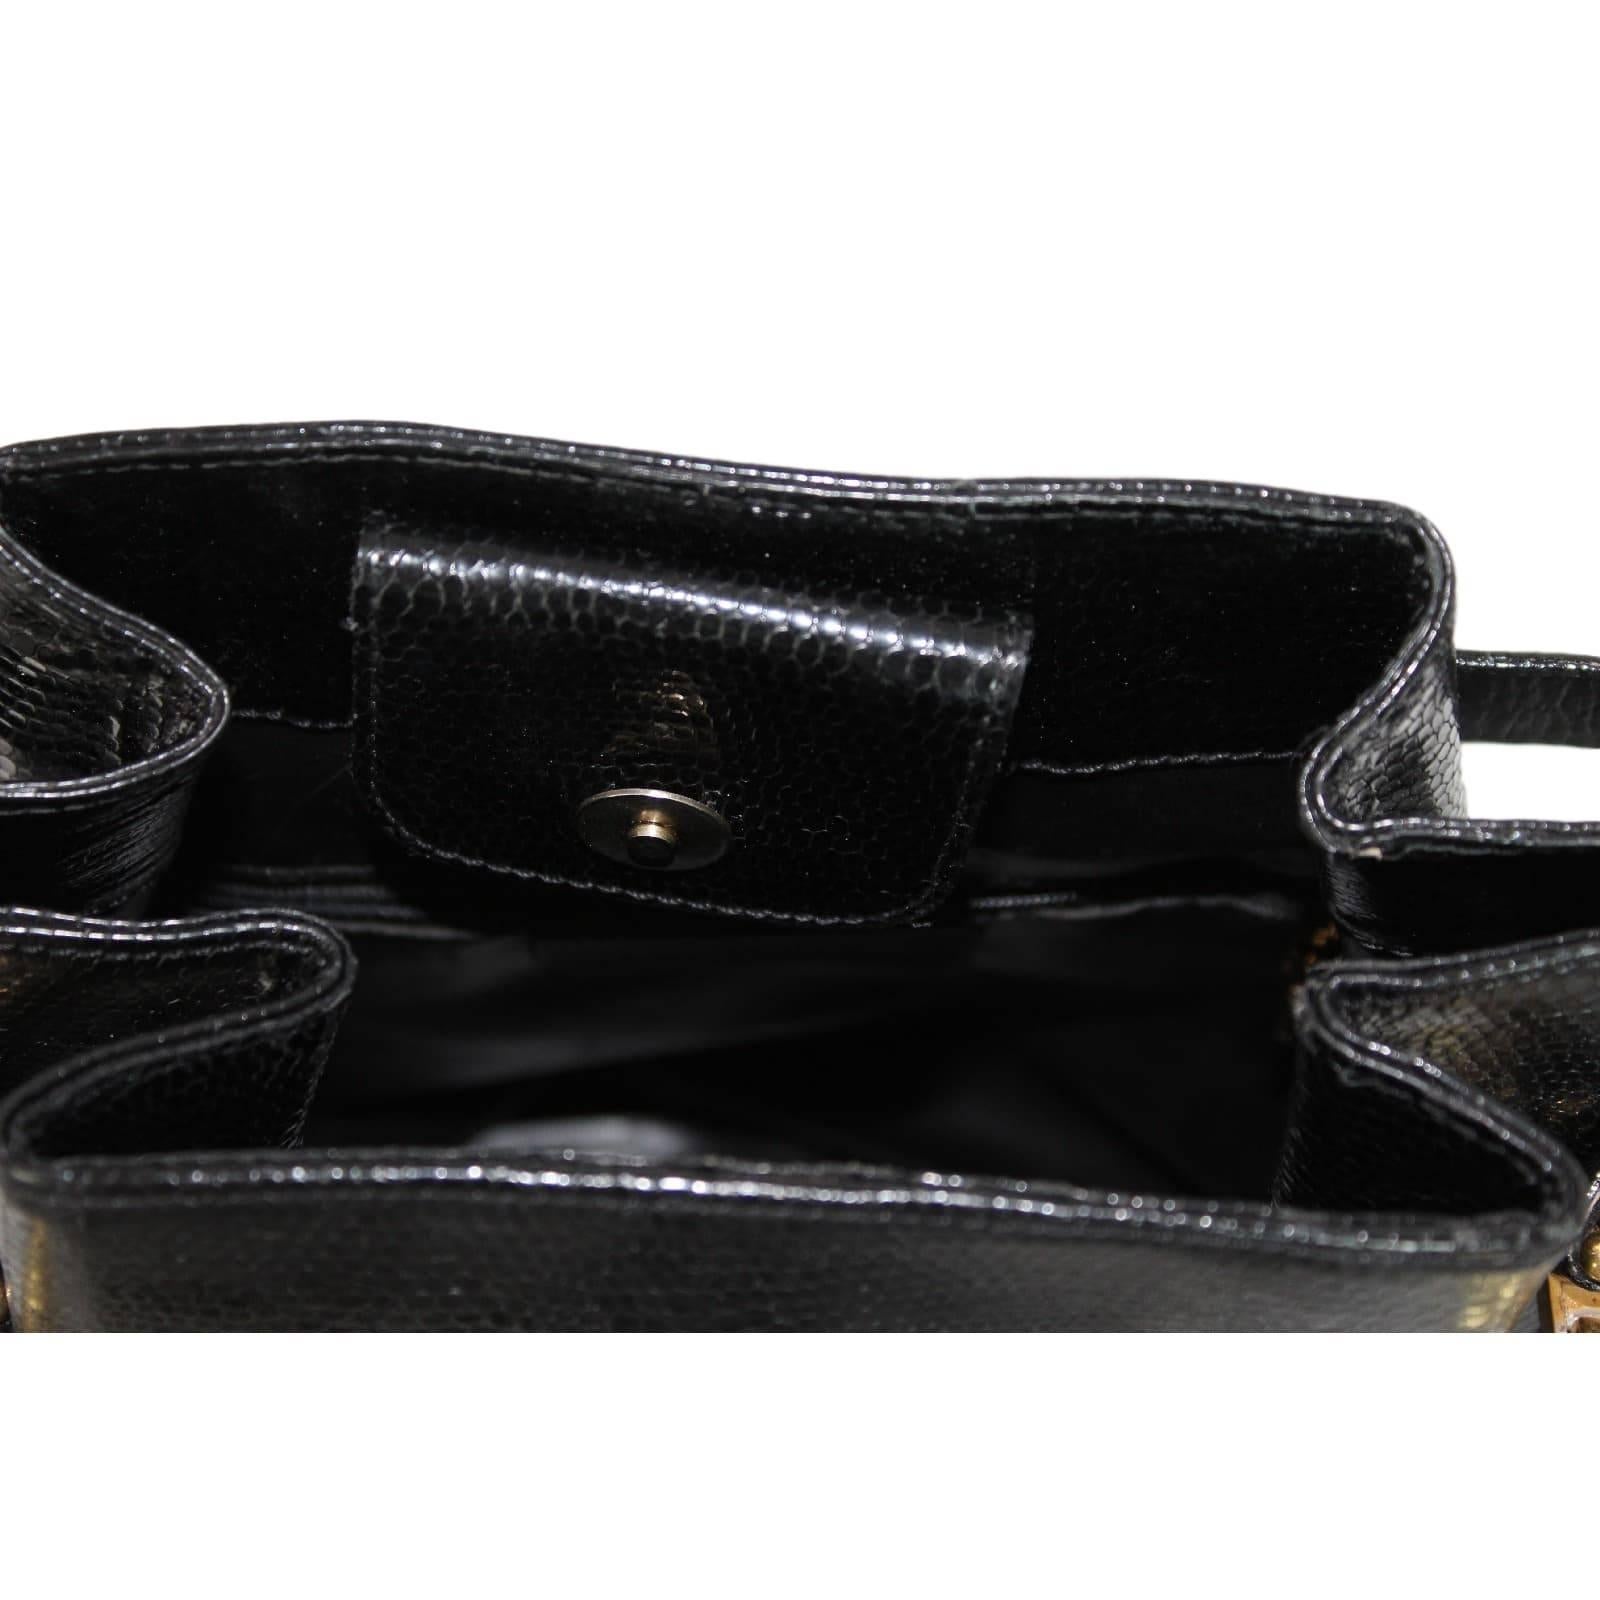 Women's Salvatore Ferragamo Bucket Black Python Snake Skin Leather Italian Shoulder Bag For Sale